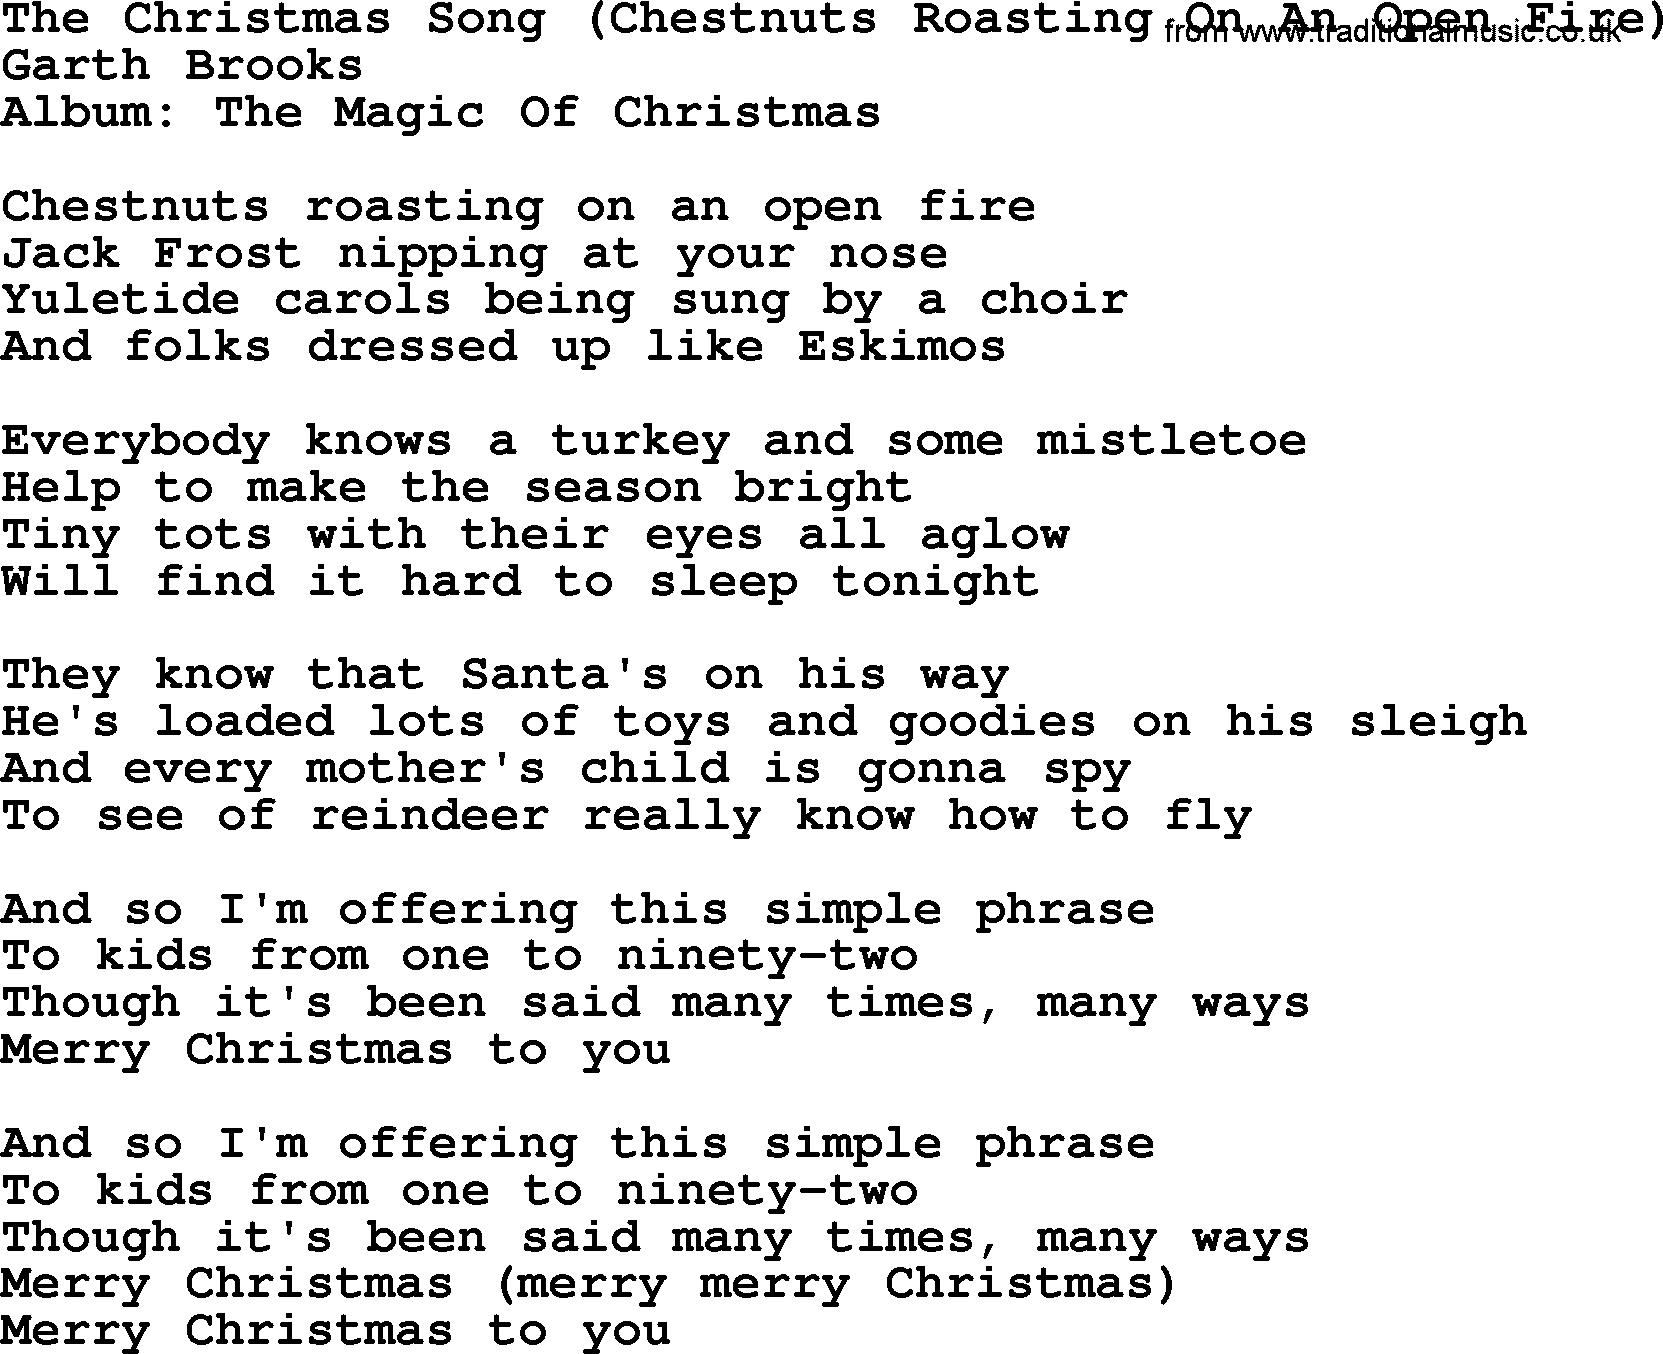 The Christmas Song, by Garth Brooks - lyrics